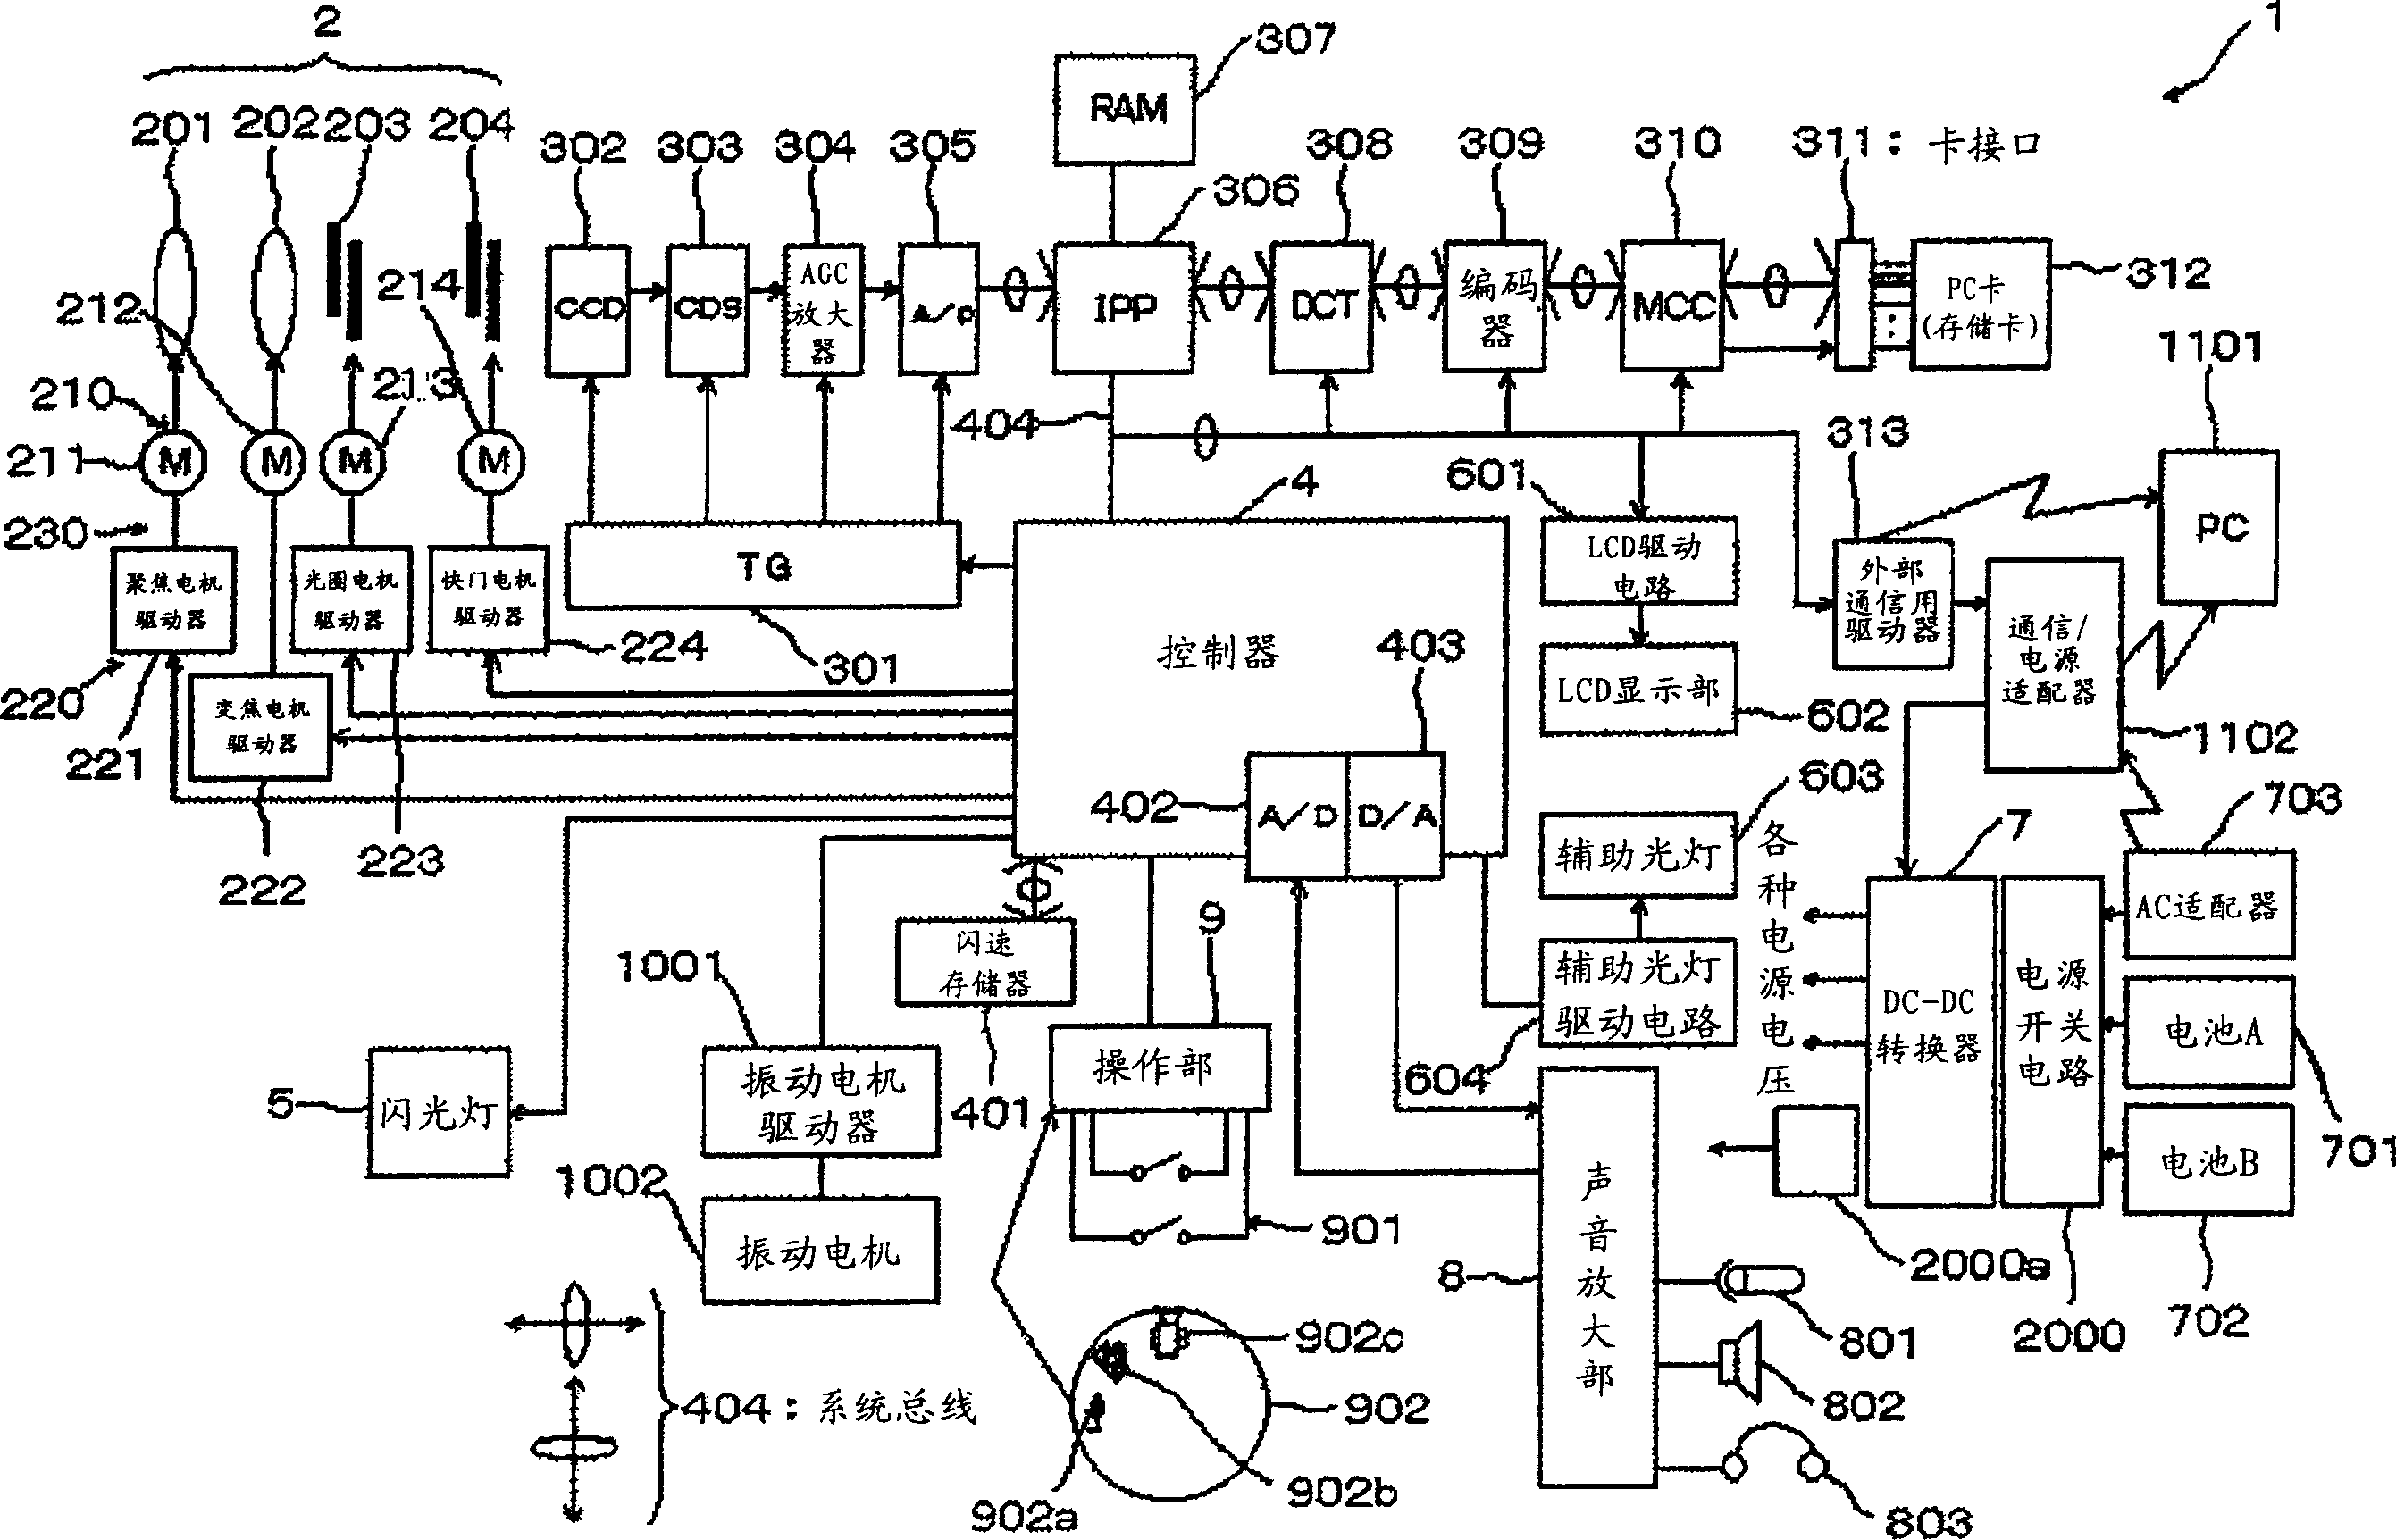 Power switching circuit